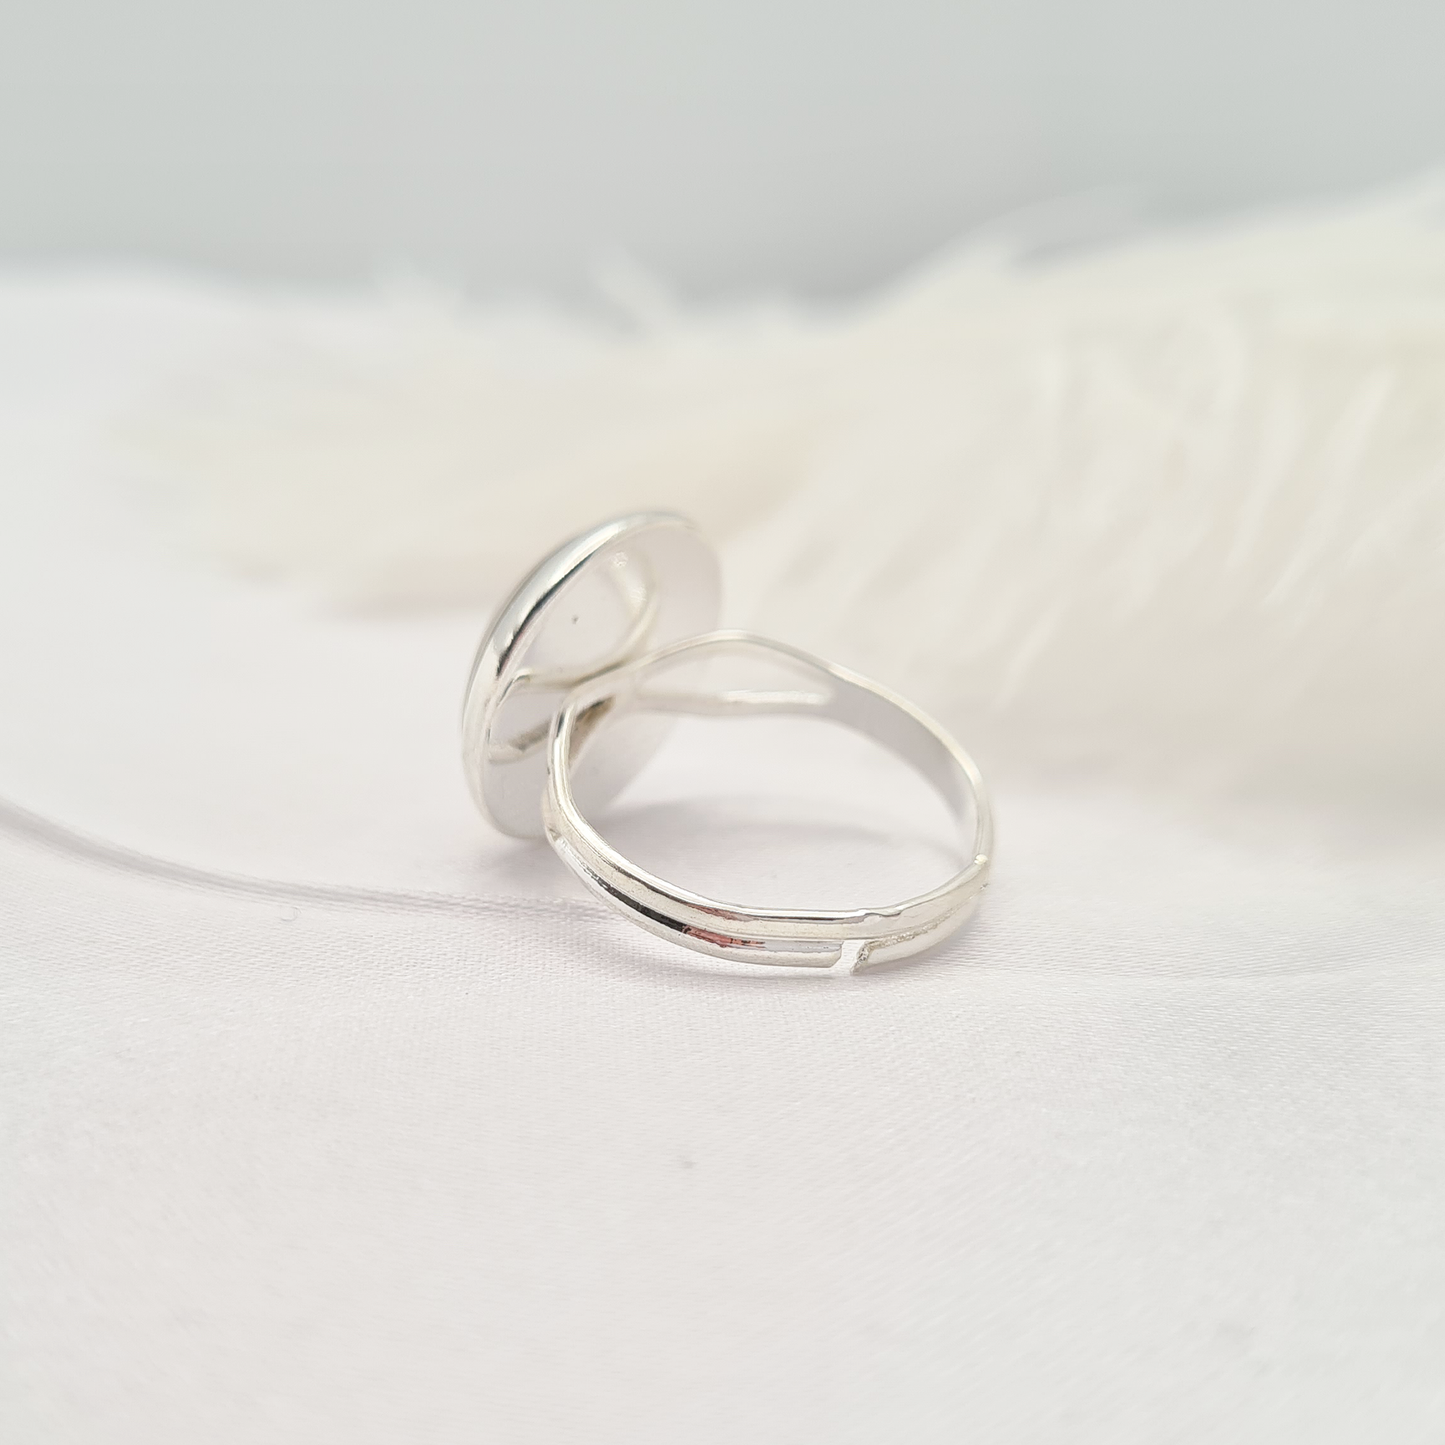 Silver ring back side showing adjustable ring